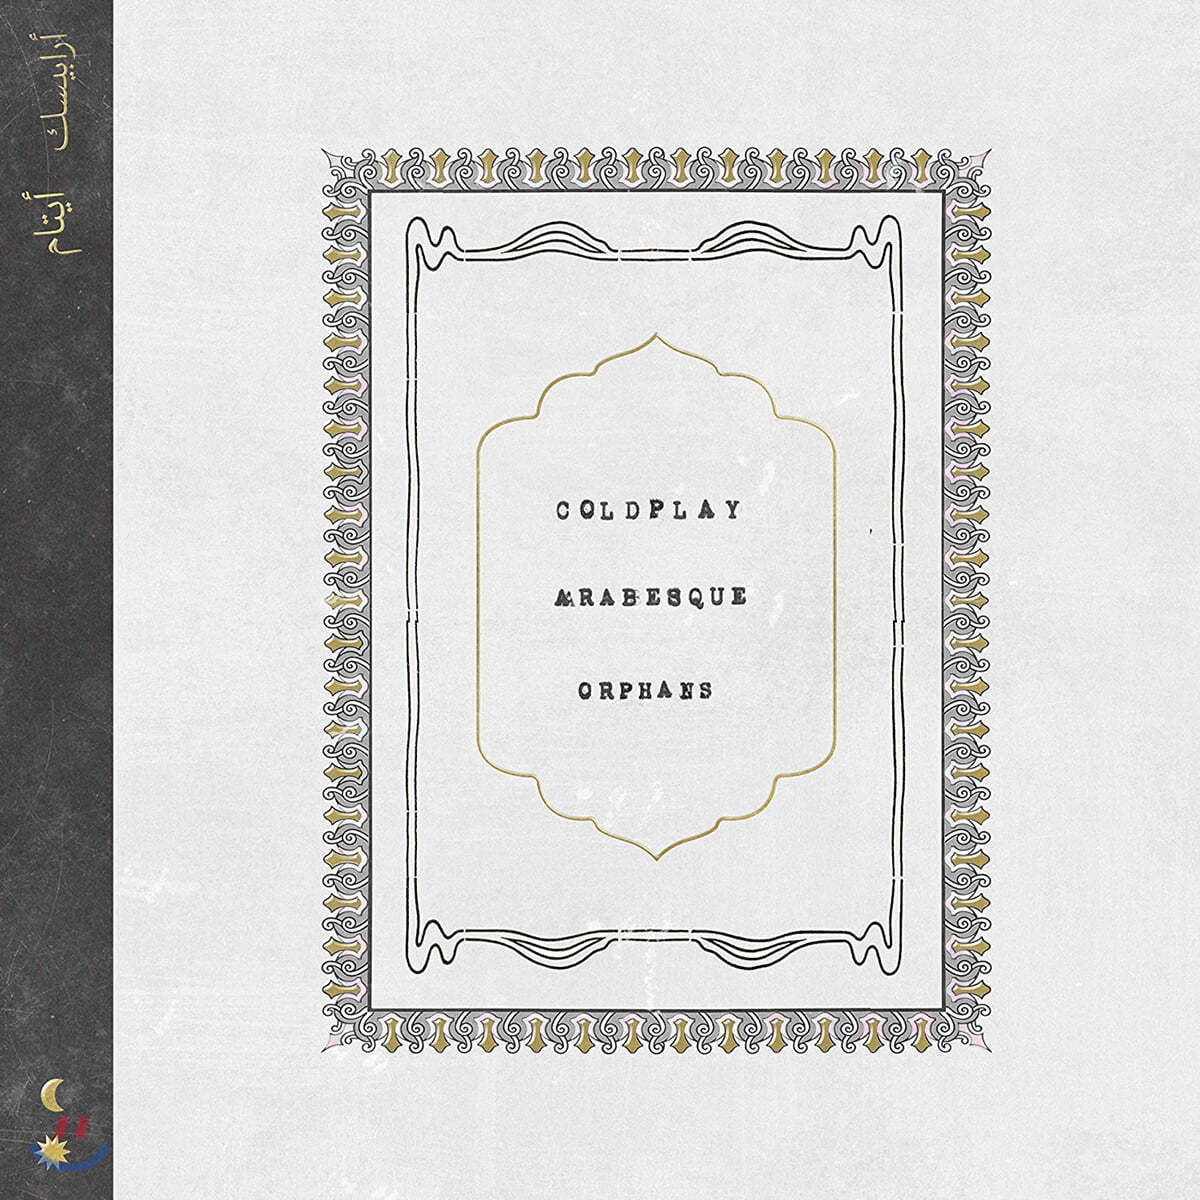 Coldplay (콜드플레이) - Orphans / Arabesque [7인치 싱글 Vinyl]